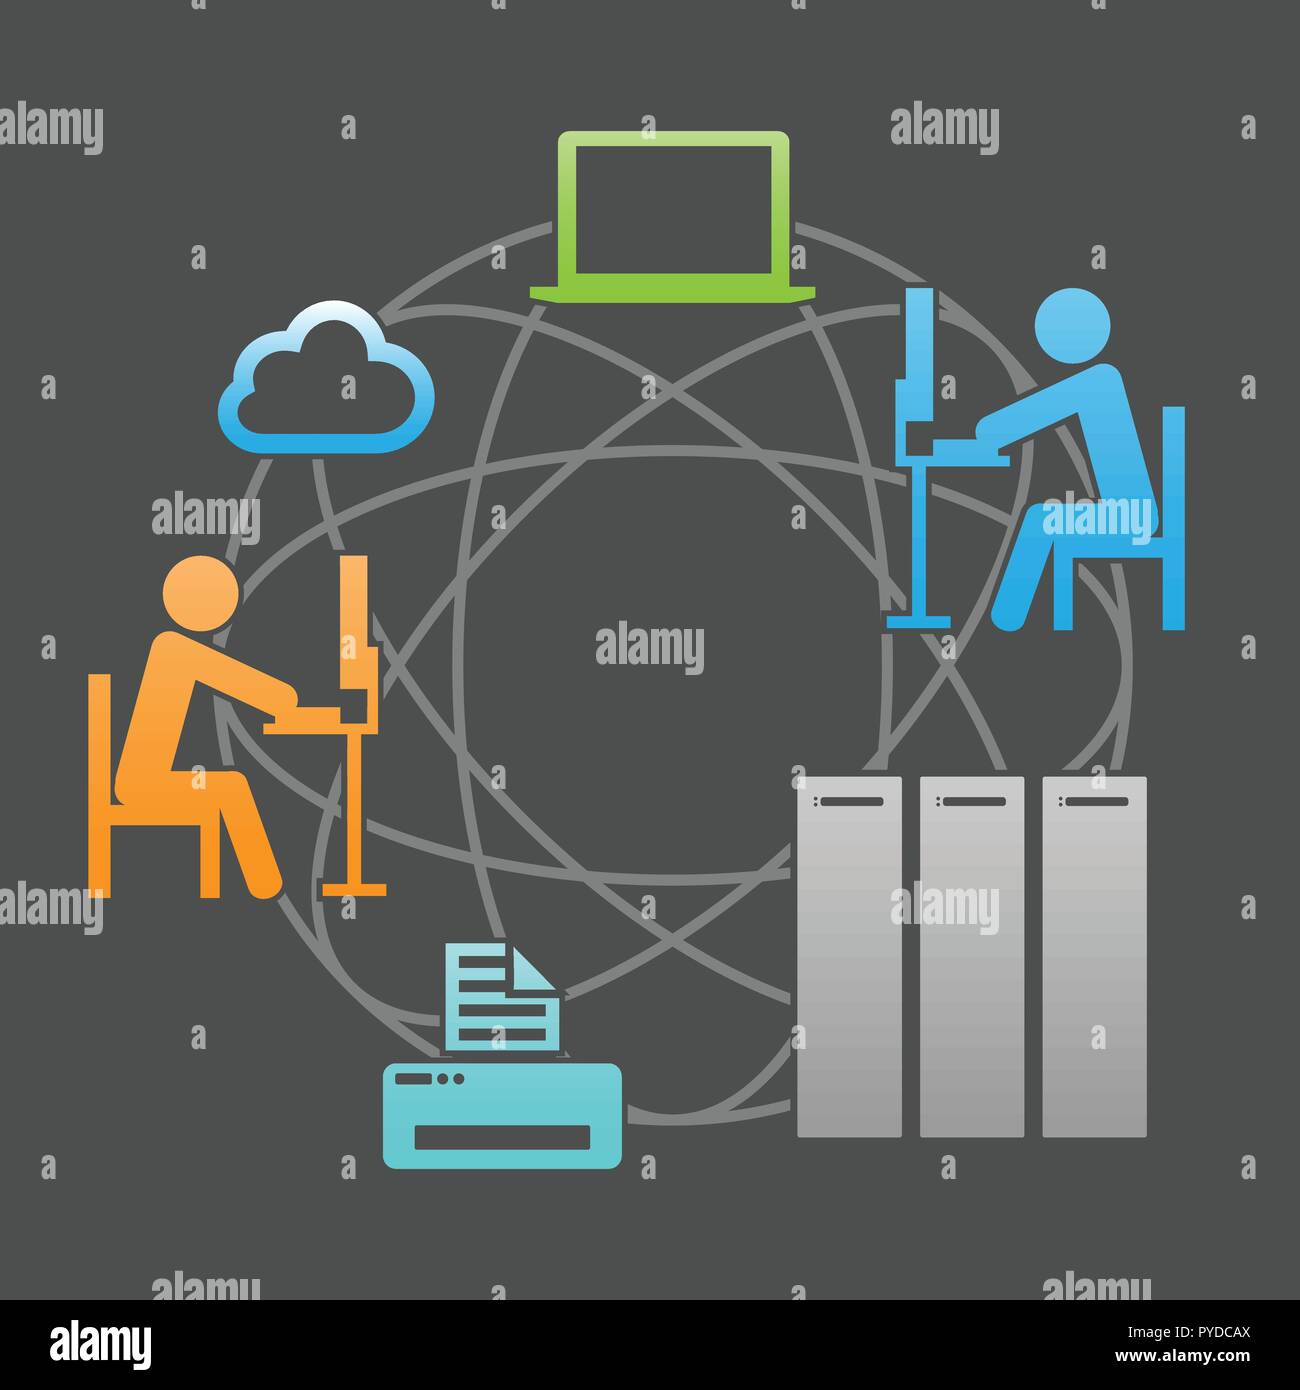 Network Communication System Infrastruktur Vector Illustration Stock Vektor